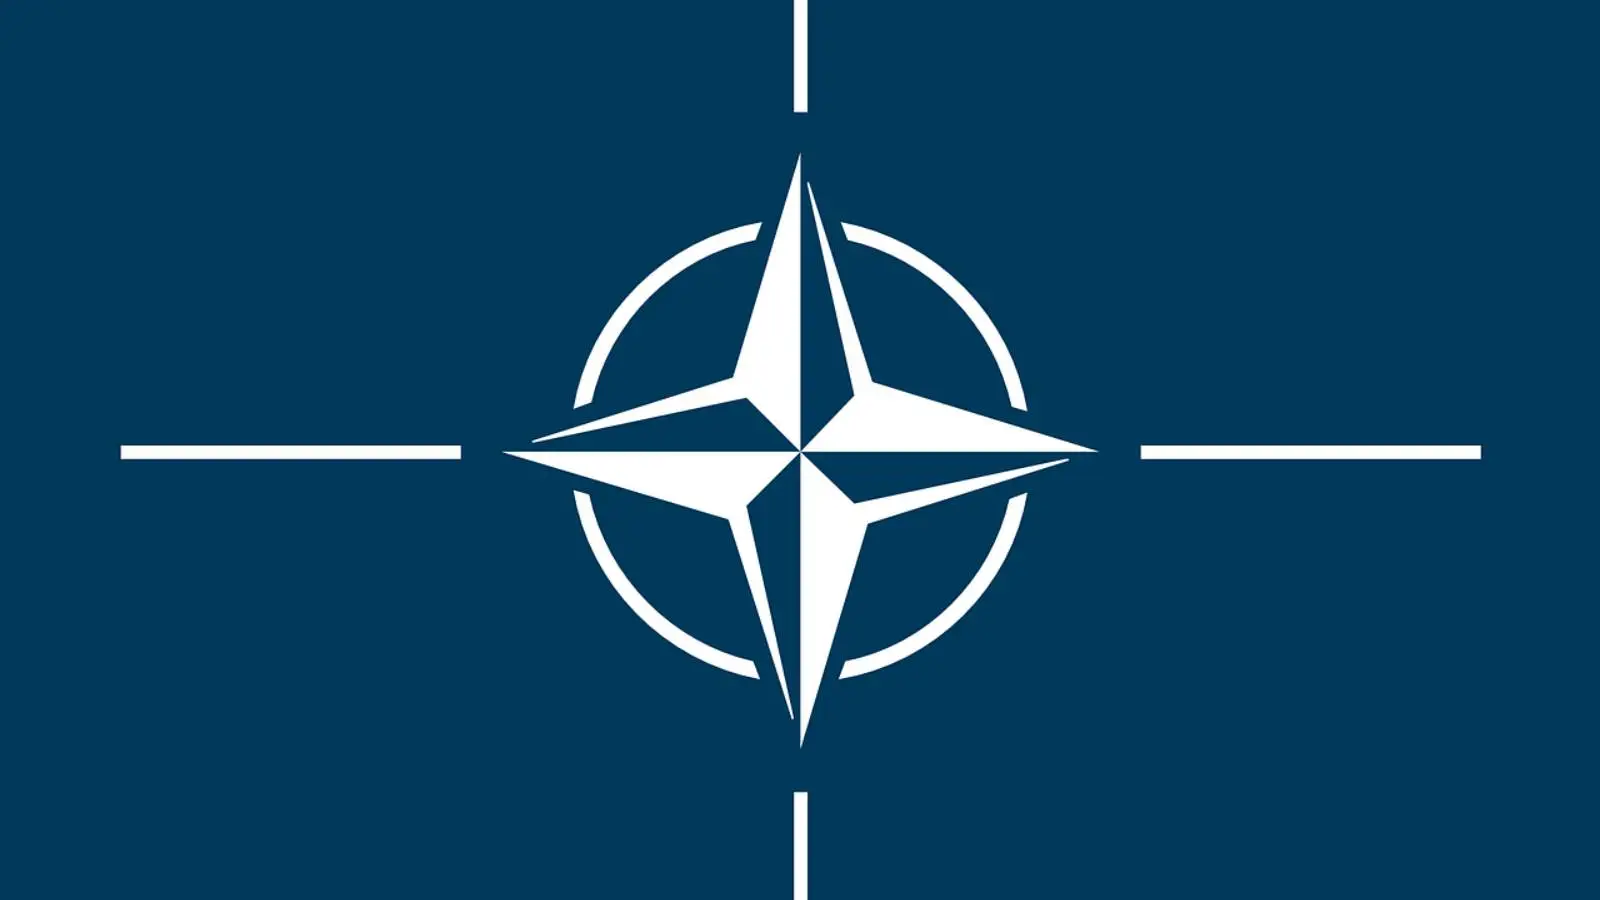 NATO Anunta ca Sanctiunile Impotriva Rusiei Afecteaza Industria sa Militara